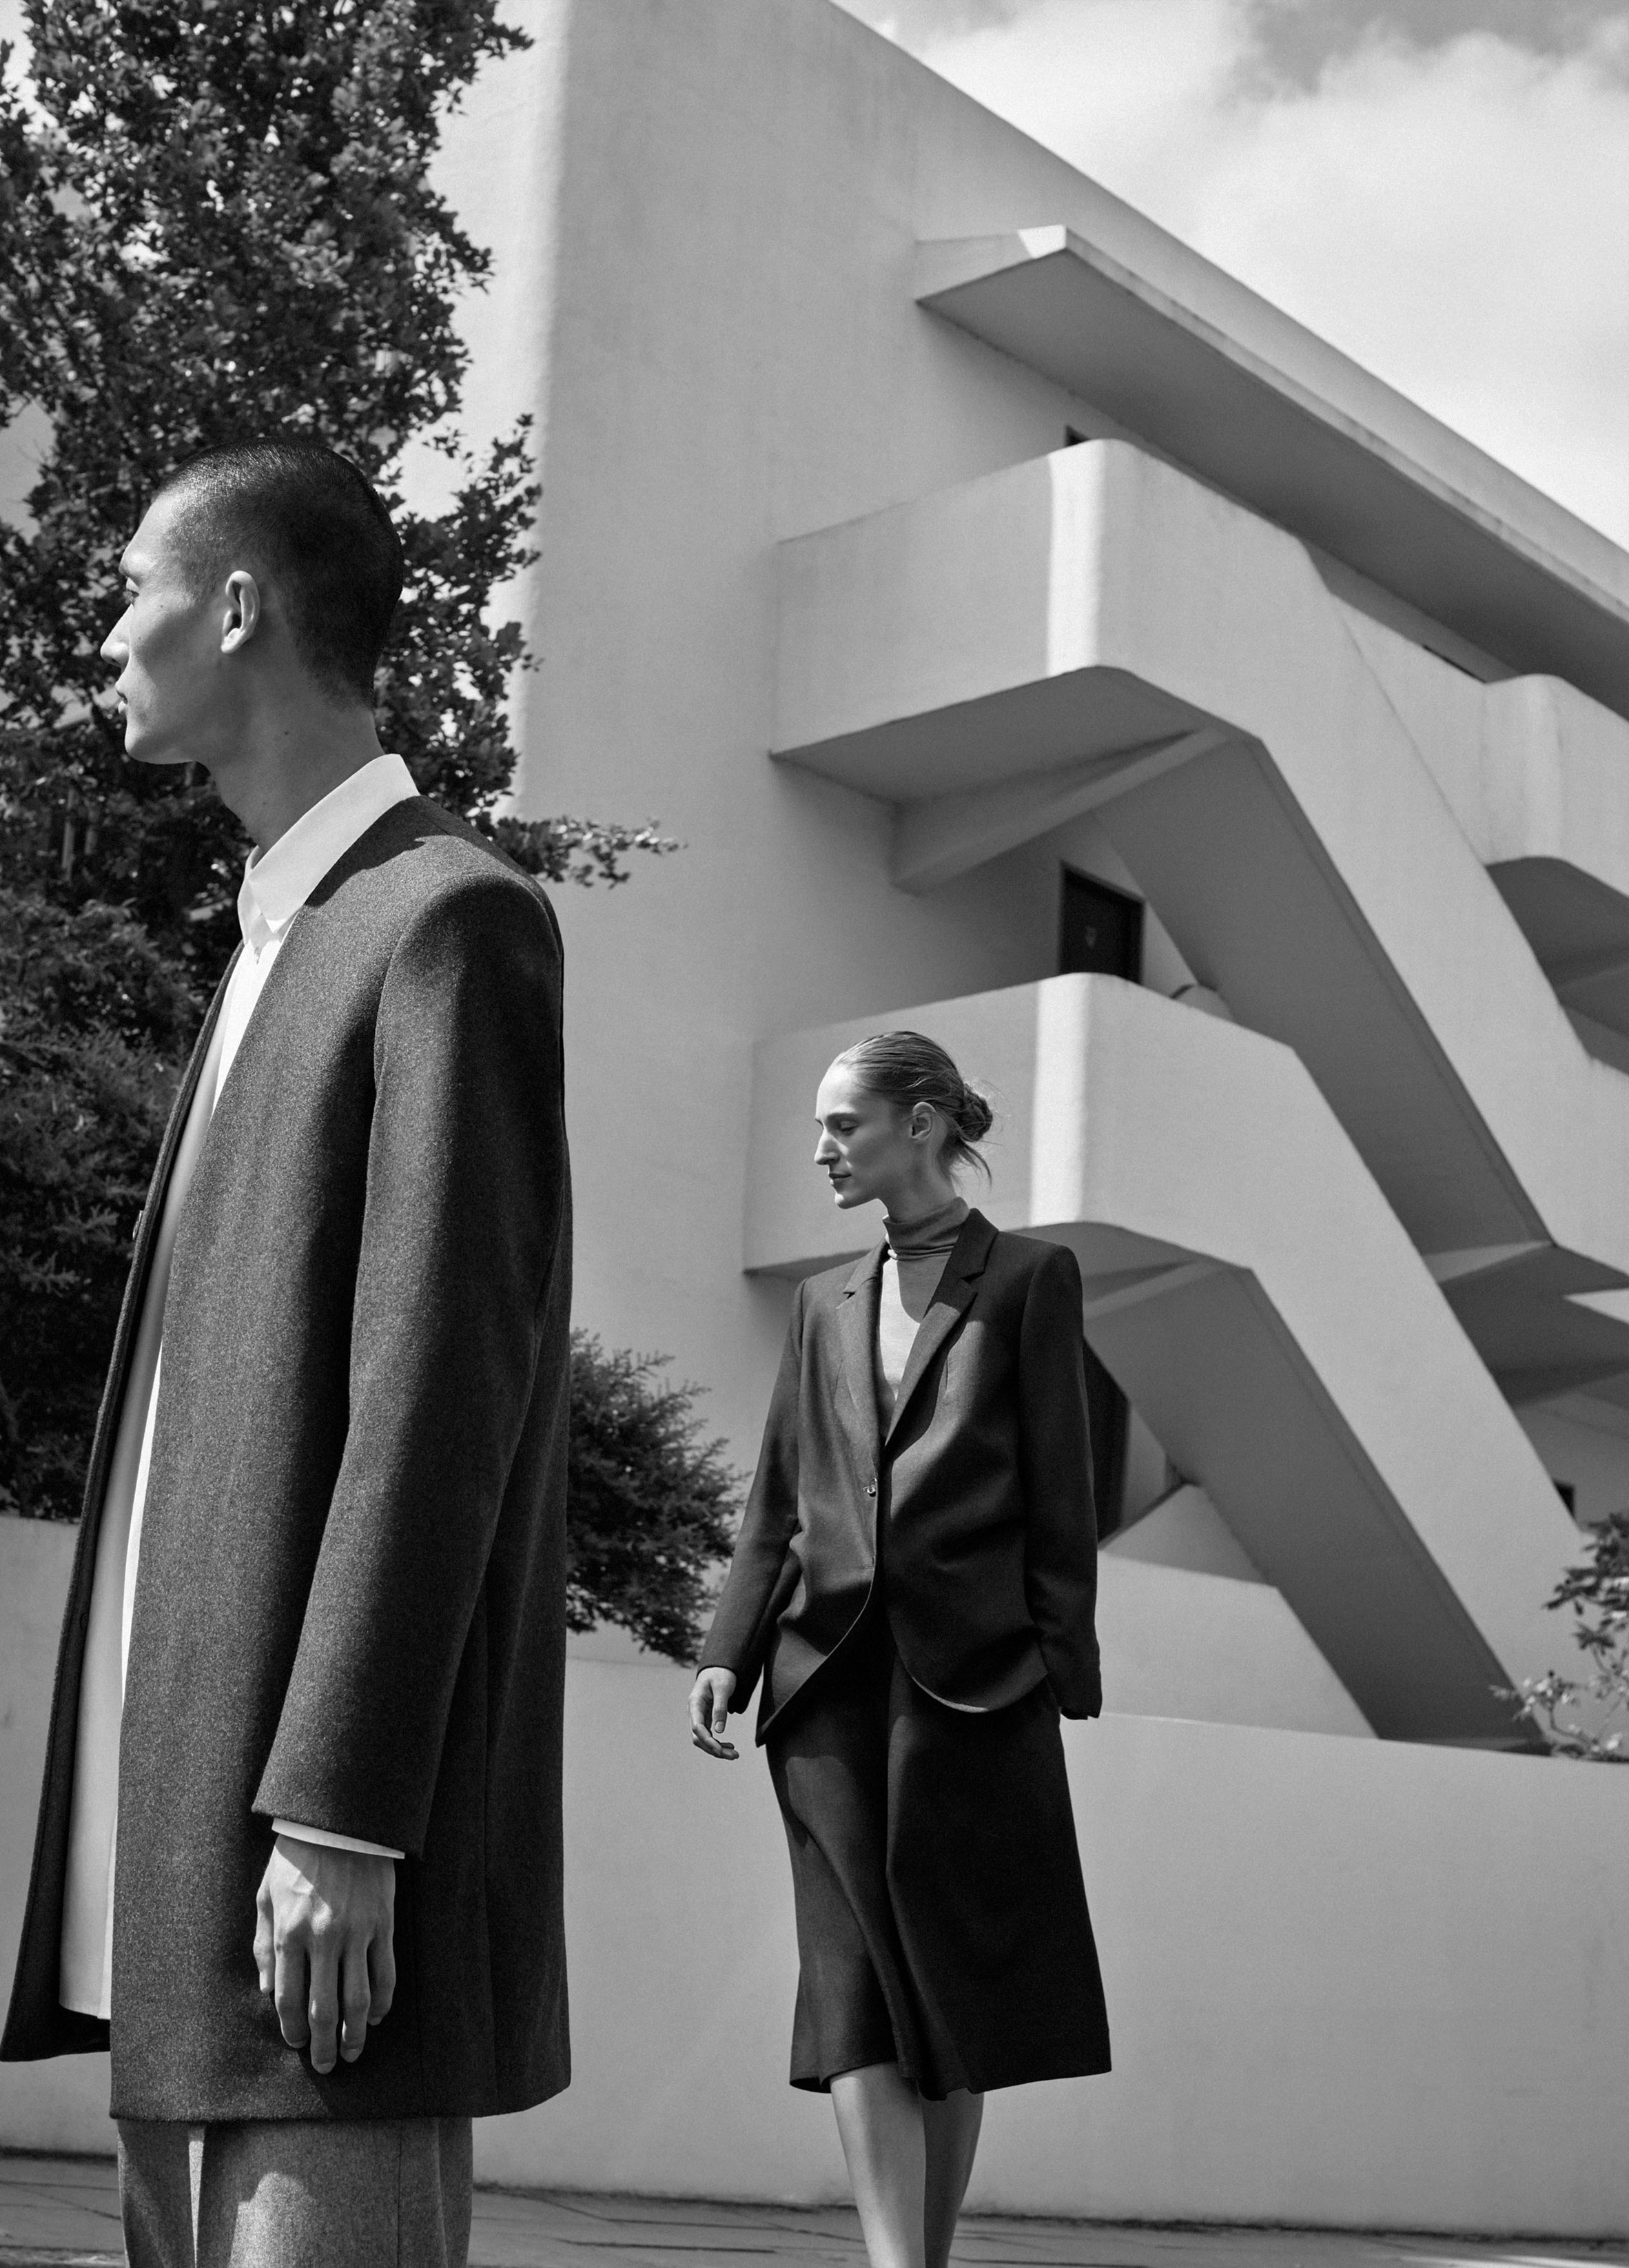 COS unveils fashion collection based on Bauhaus design principles